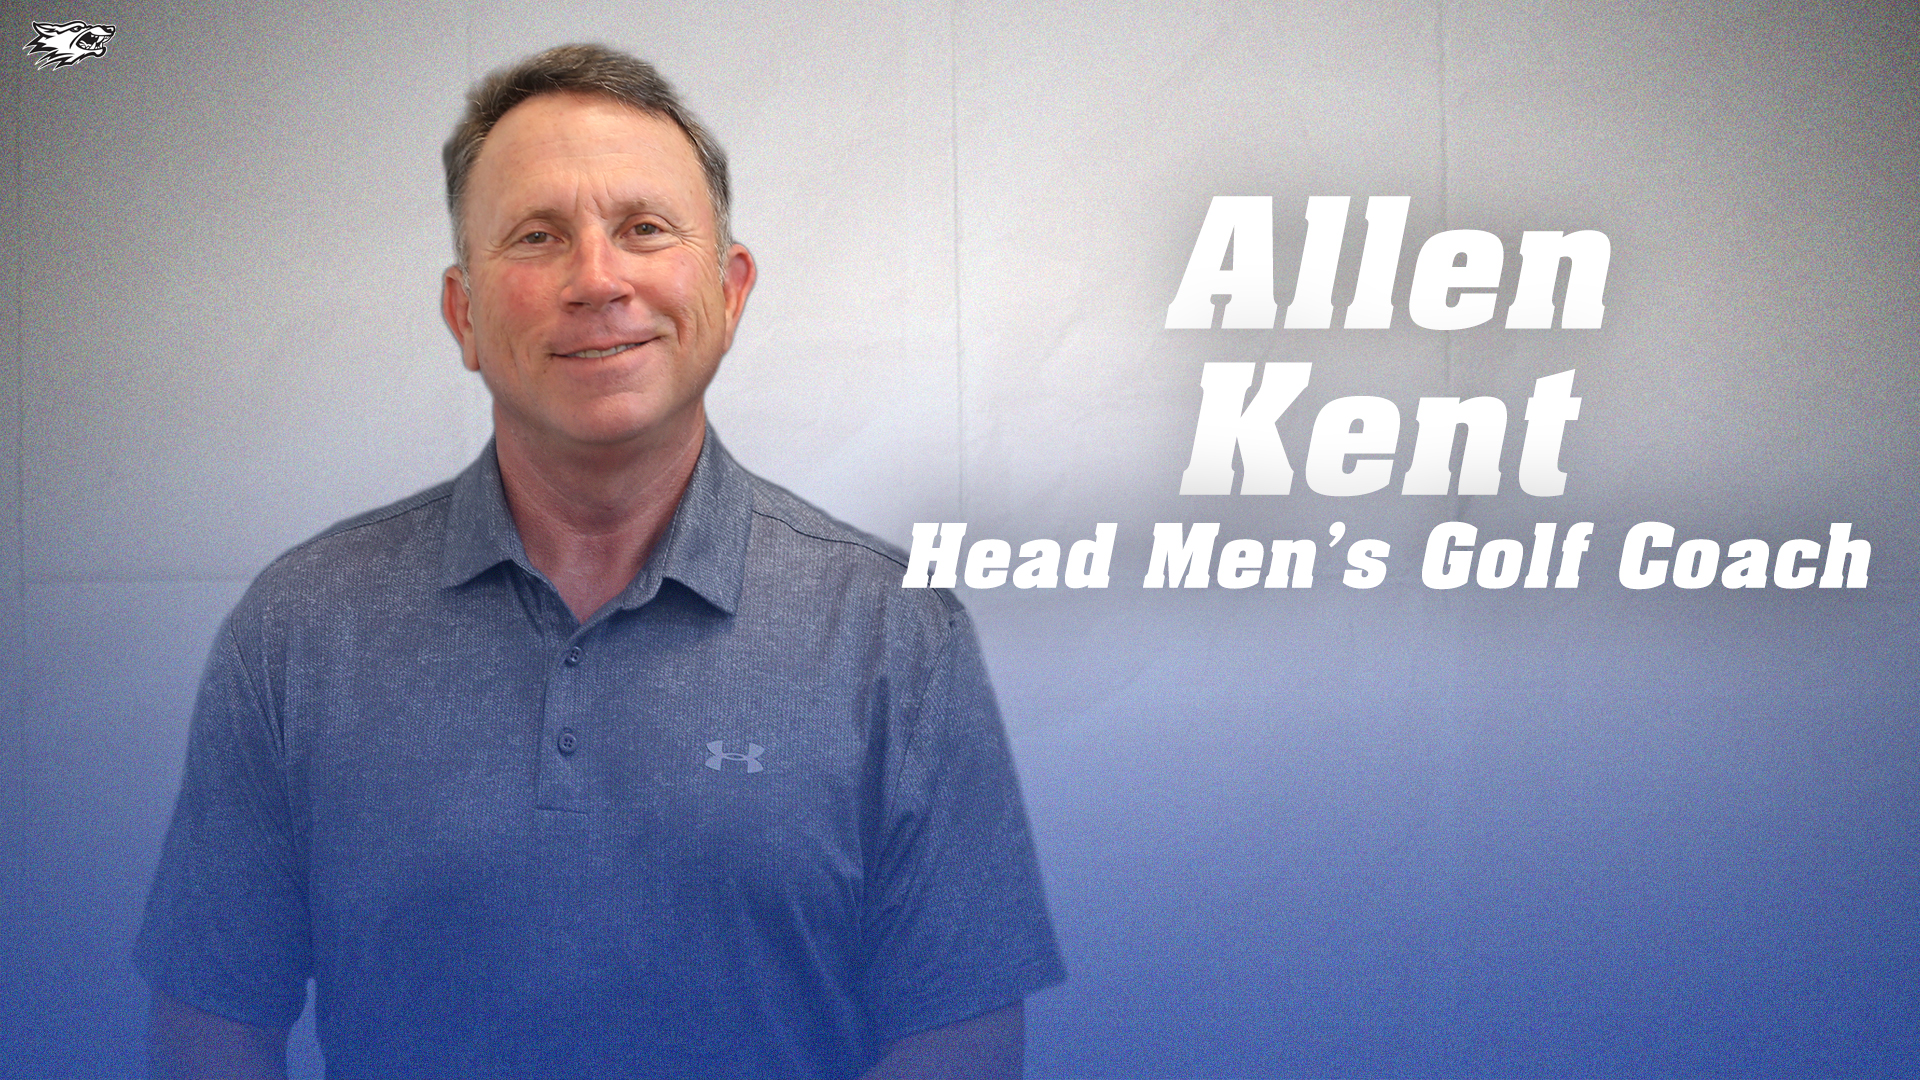 Kent named head golf coach